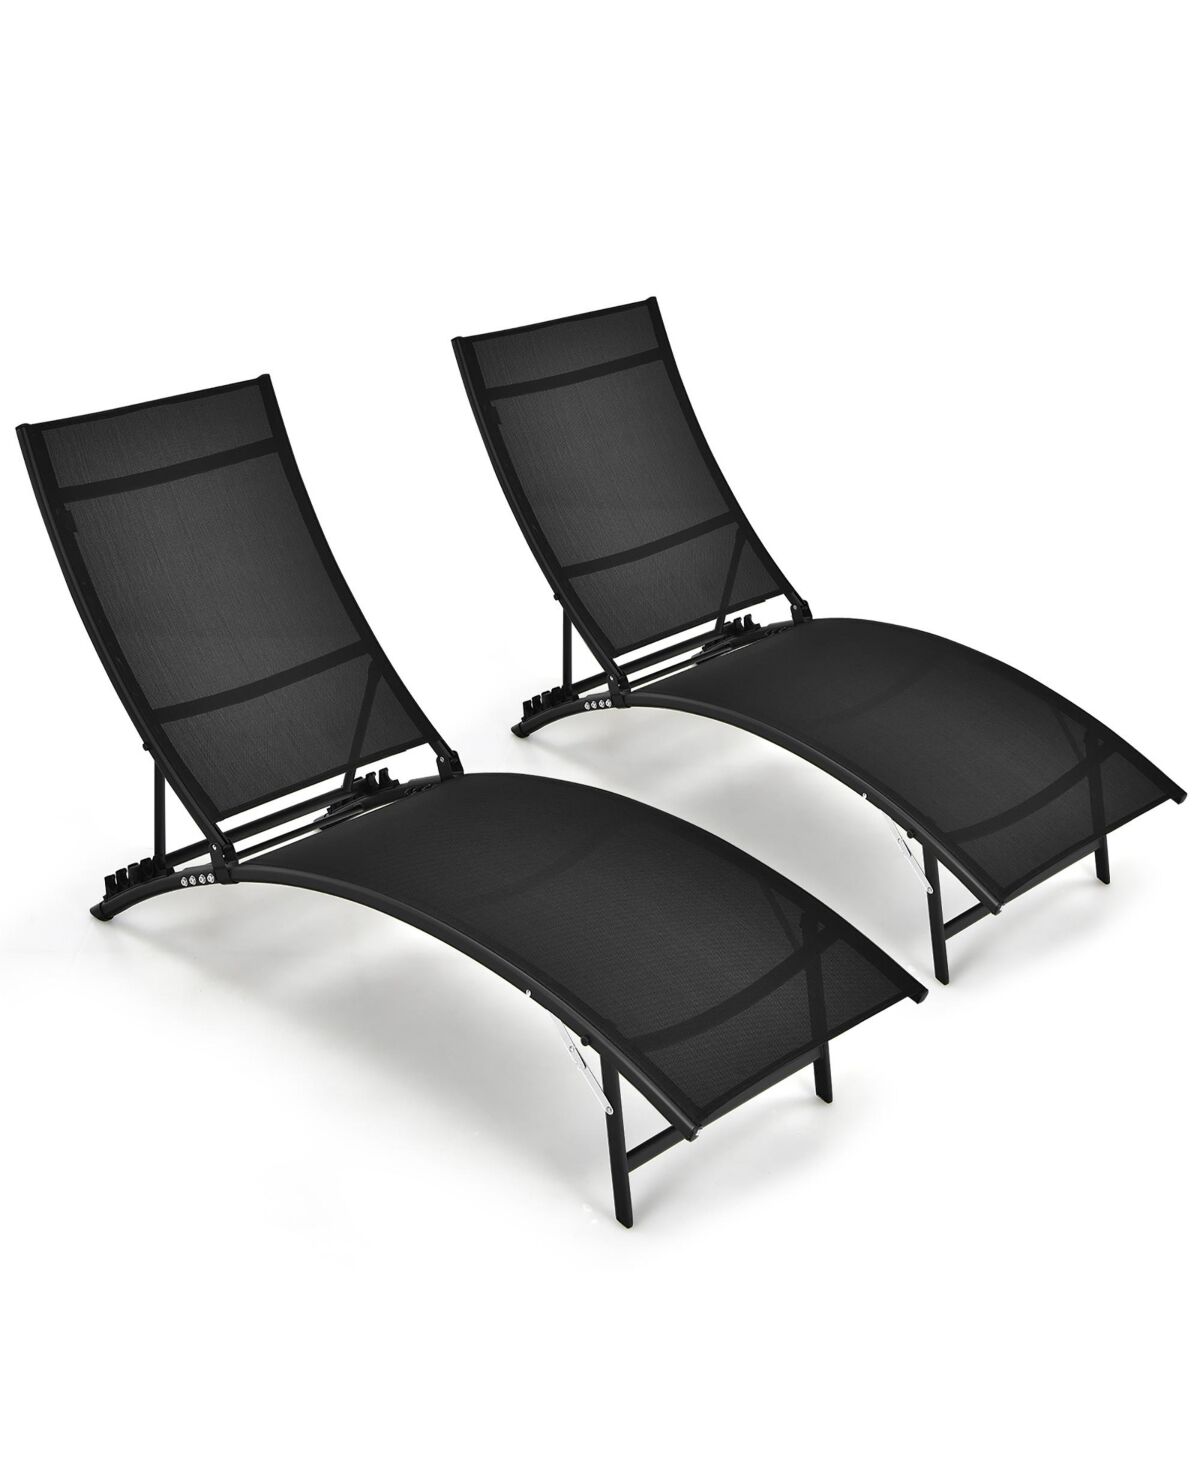 Costway 2 Pcs Patio Folding Chaise Lounge Chair Recliner Adjustable Stackable Deck - Black